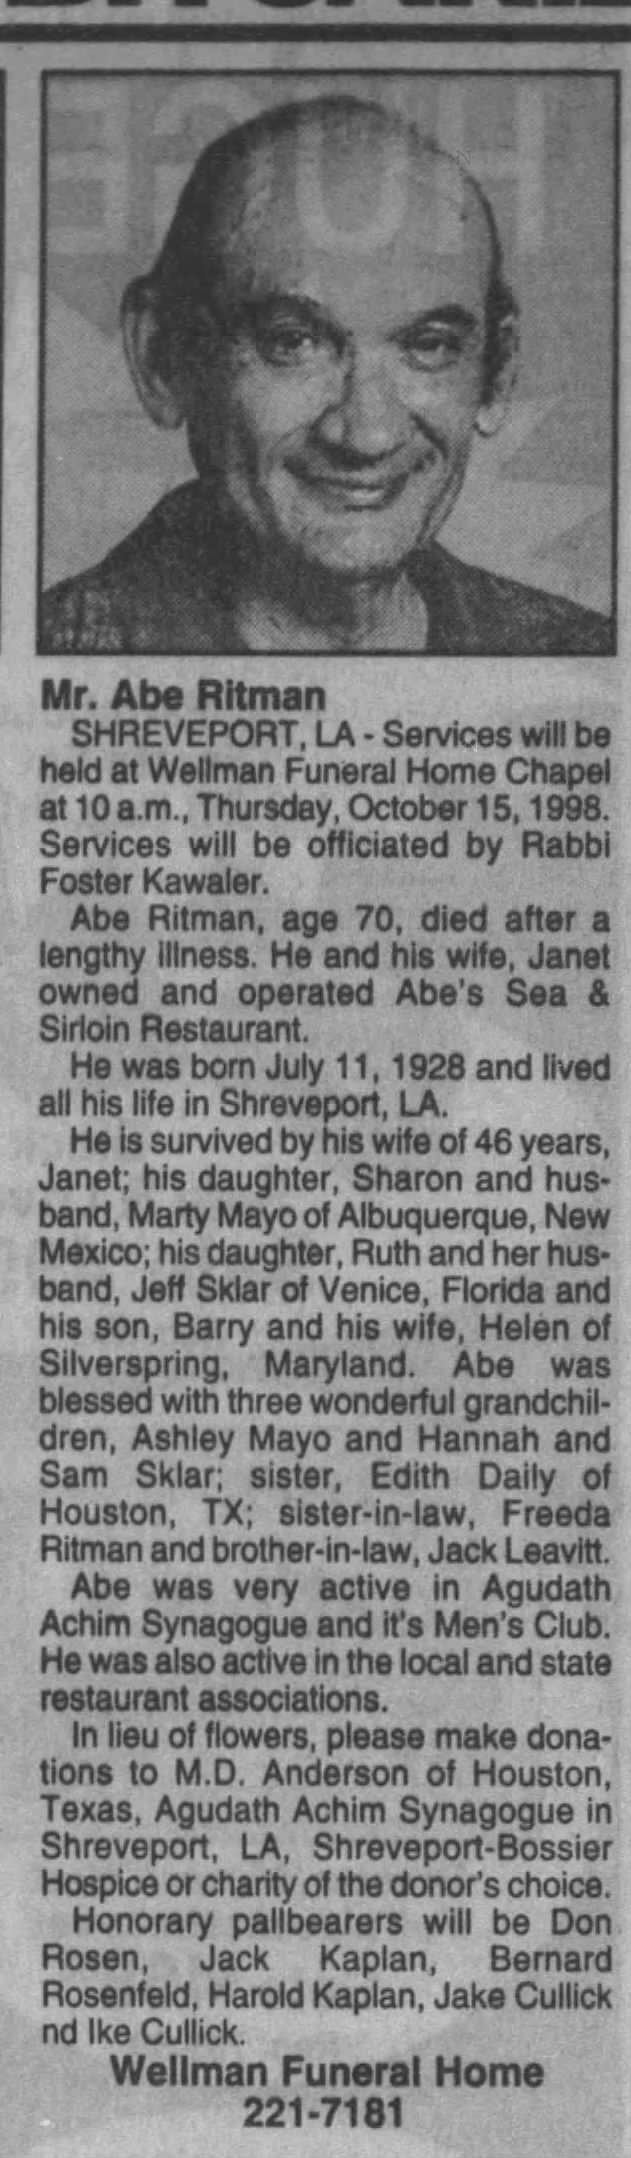 Abe Ritman Obituary 1998